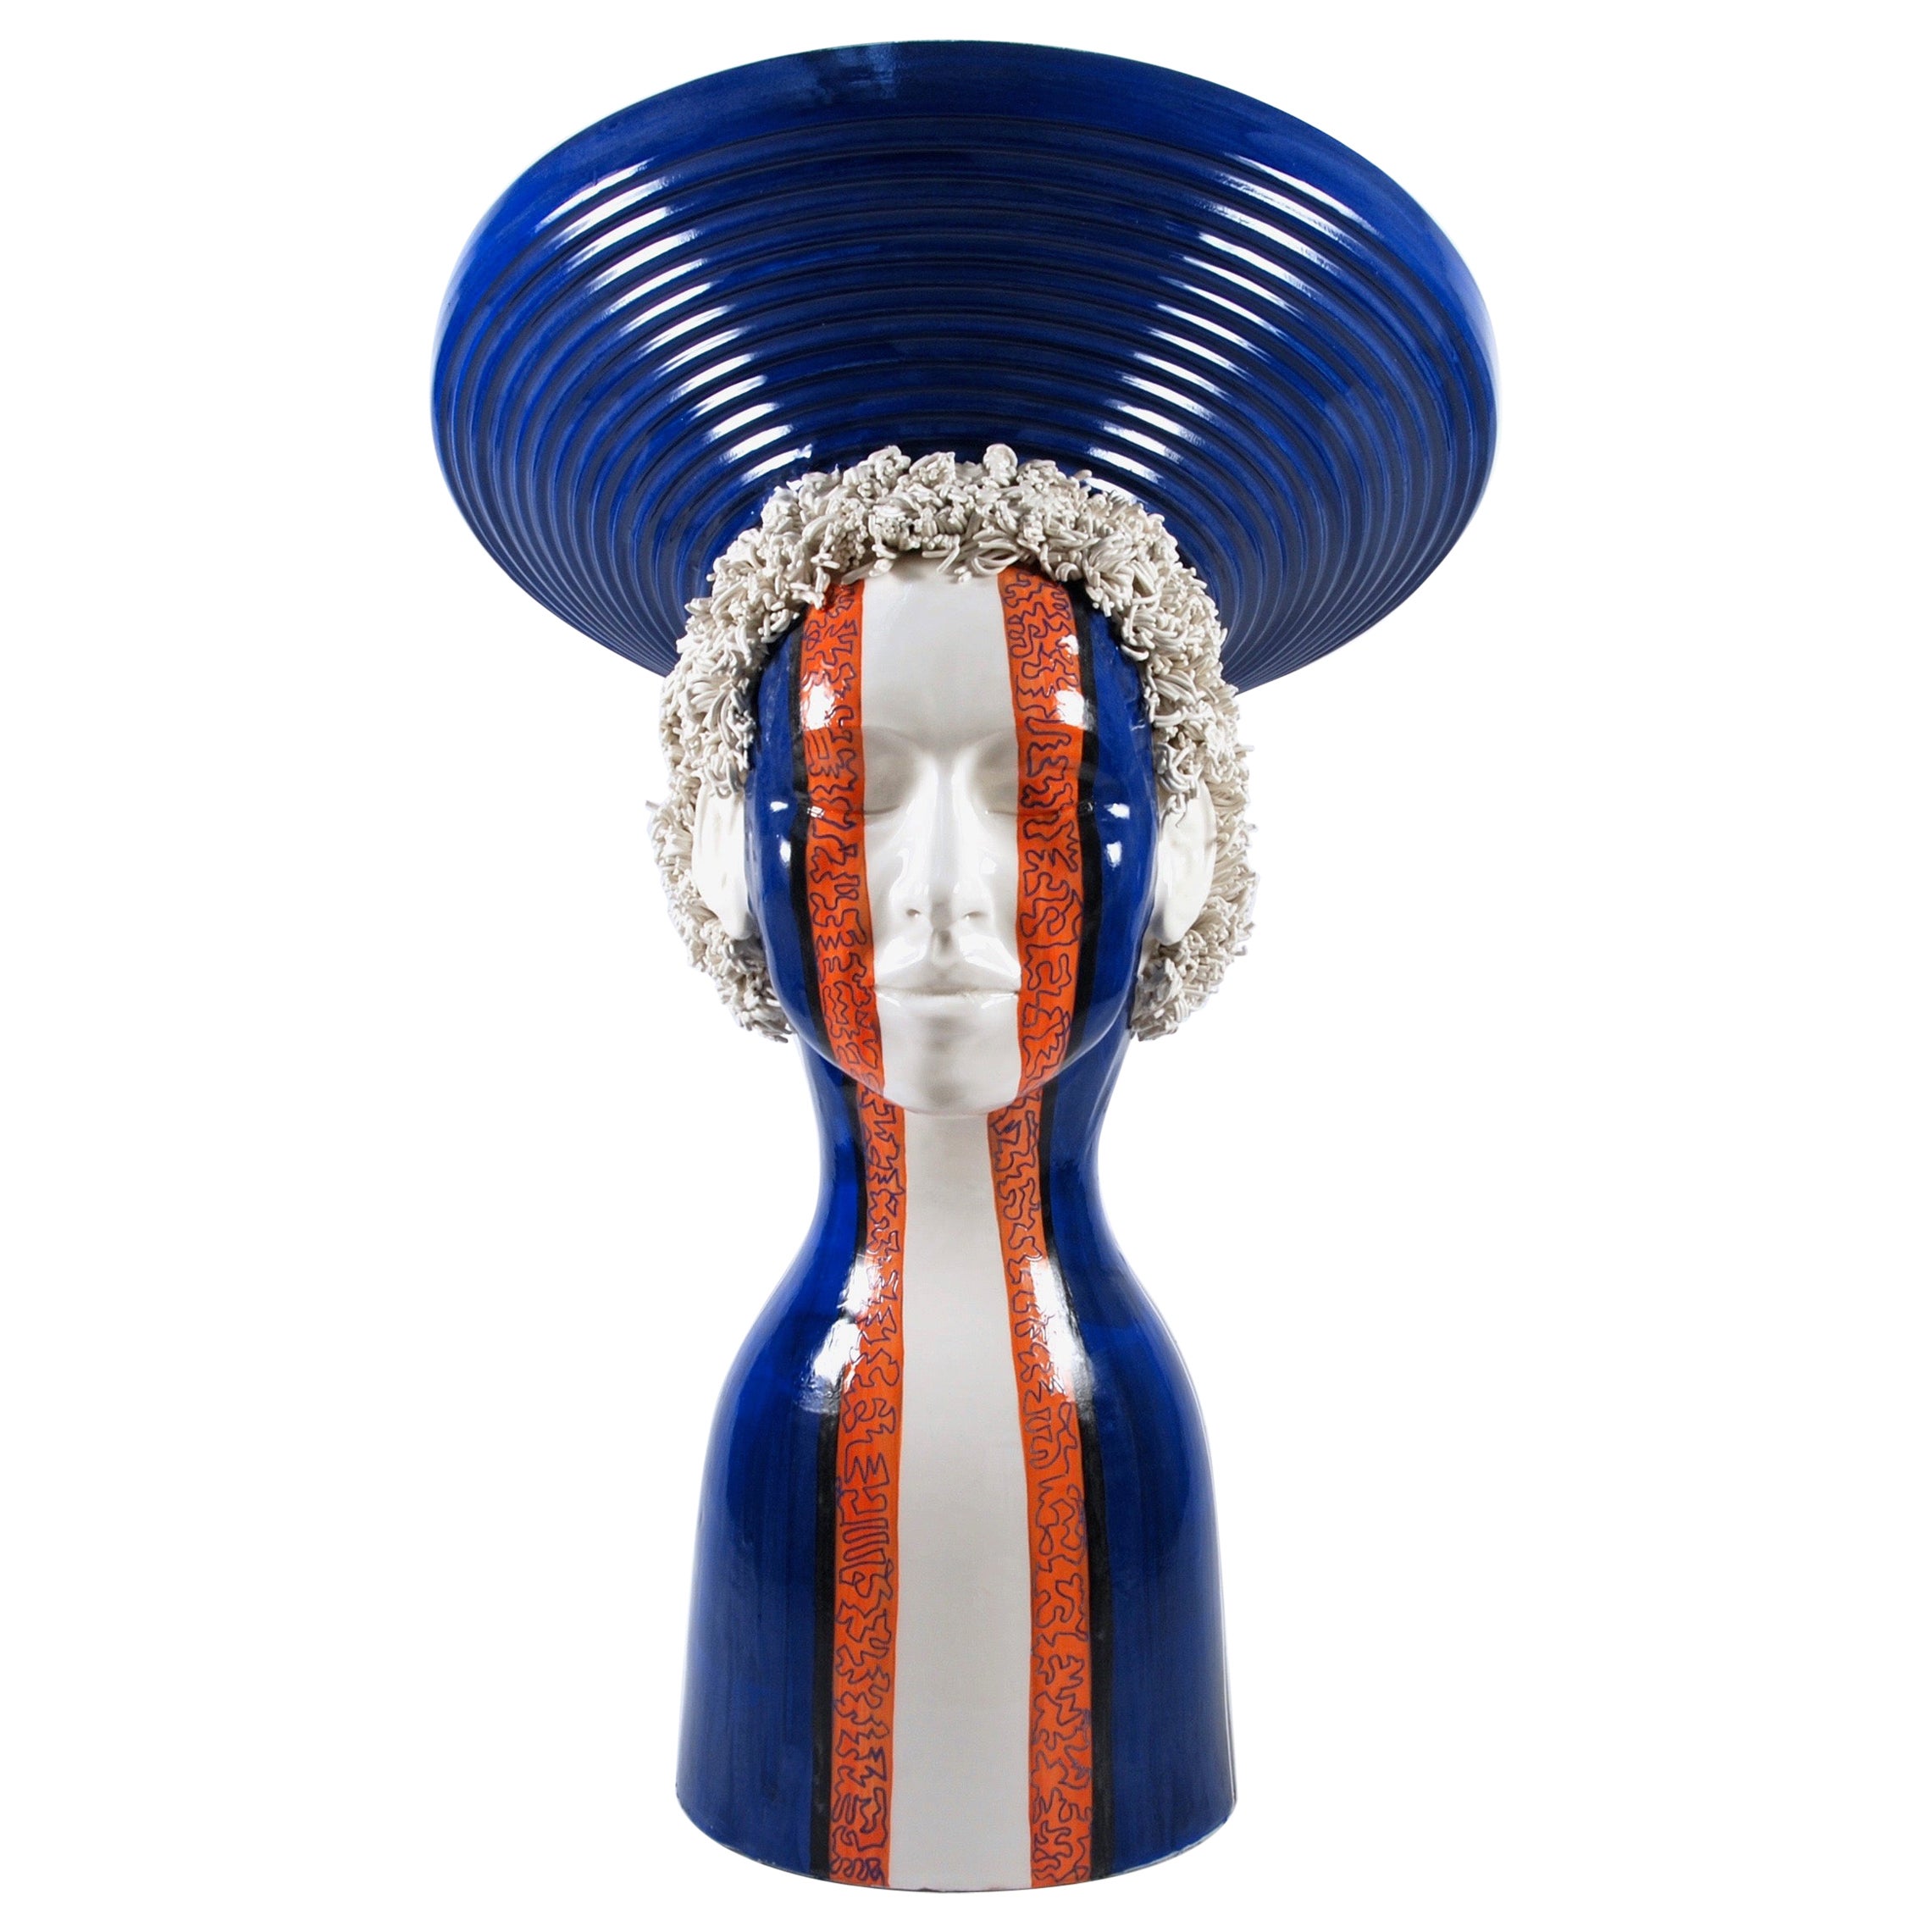 Woman's Head Blue Decorative Ceramic Piece, Handmade Italy, 2021, Hand-Crafted